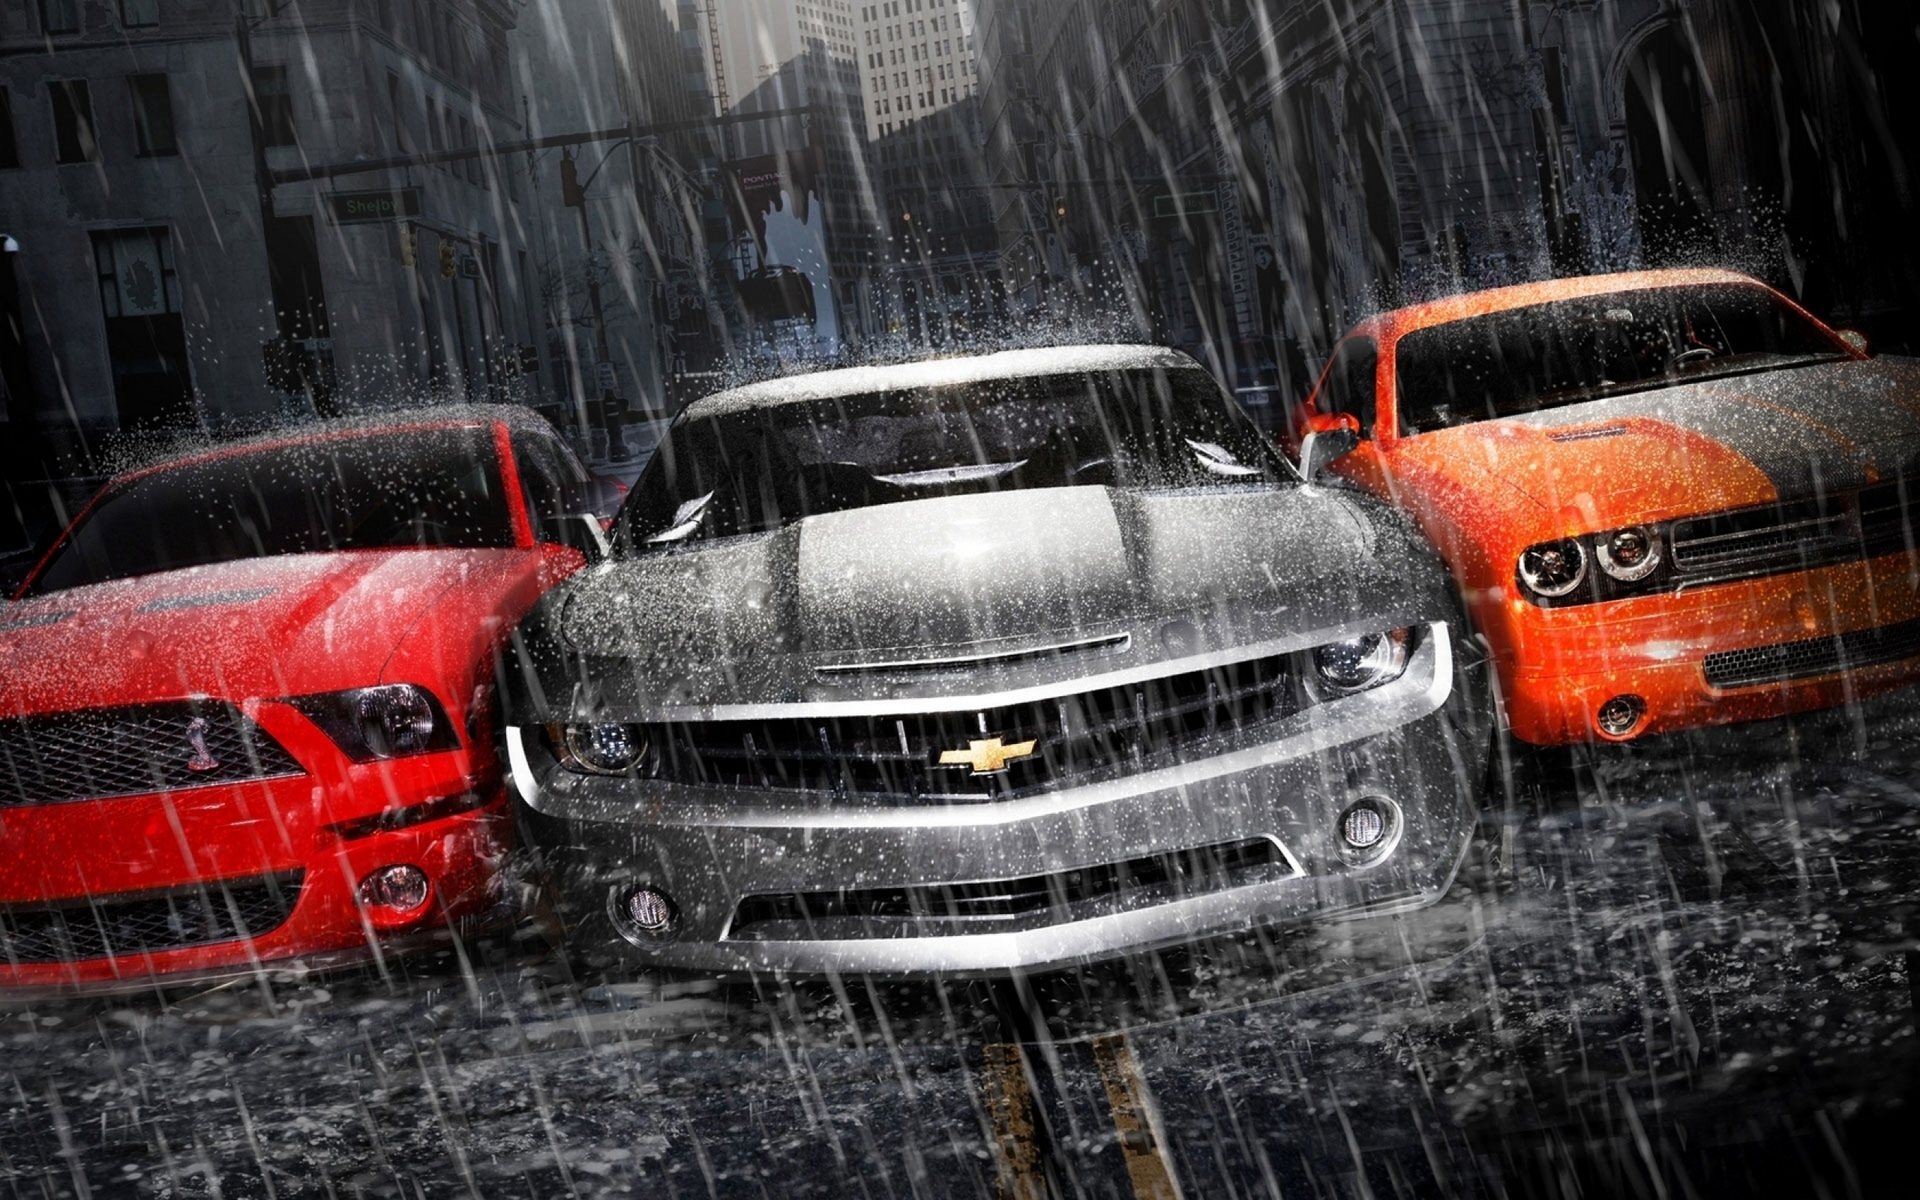 Картинка: Суперкары, chevrolet camaro, dodge сhallenger, ford mustang, дождь, ливень, дорога